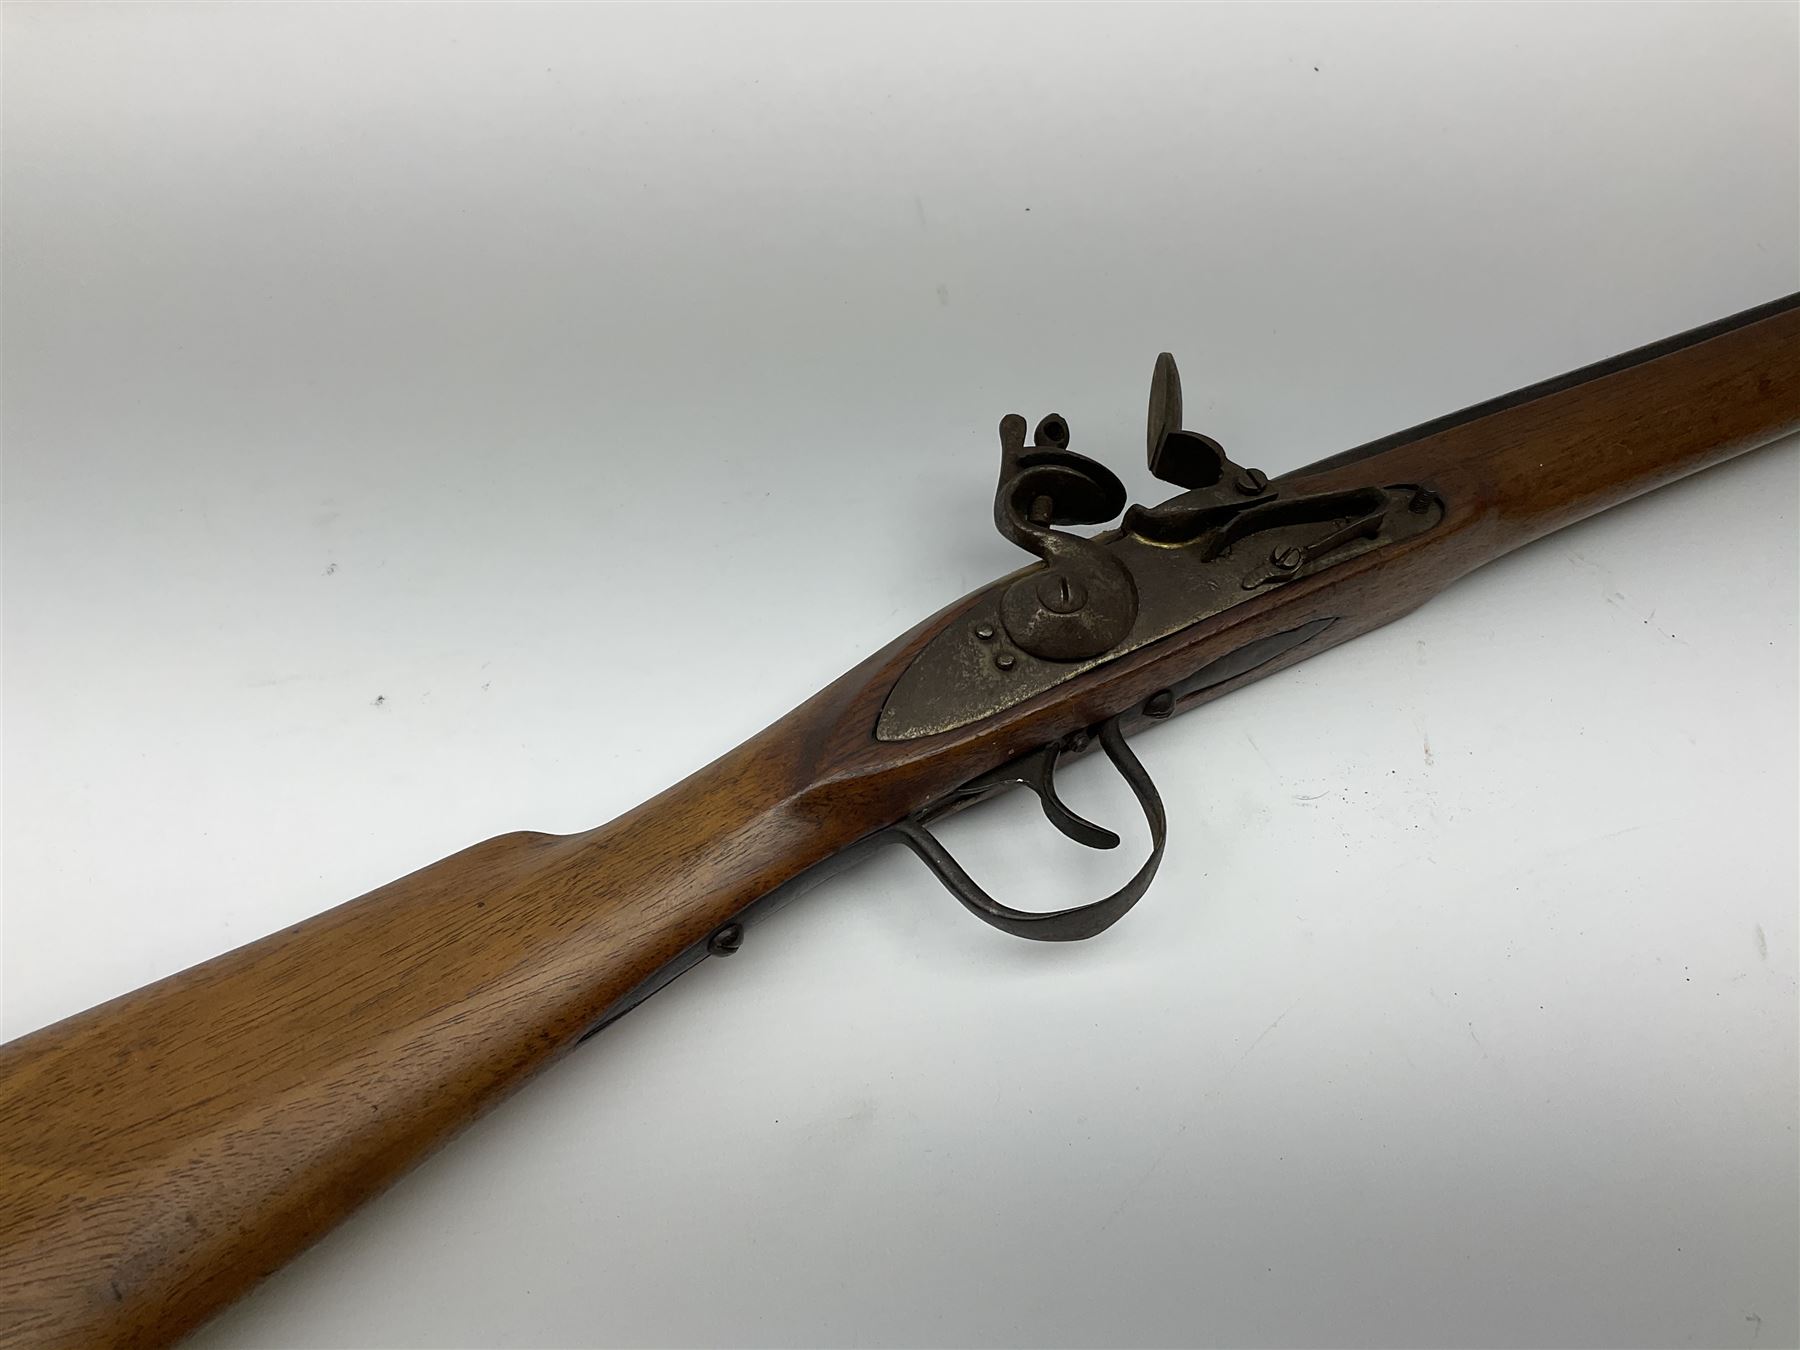 19th century flintlock musket for restoration or display - Bild 3 aus 11